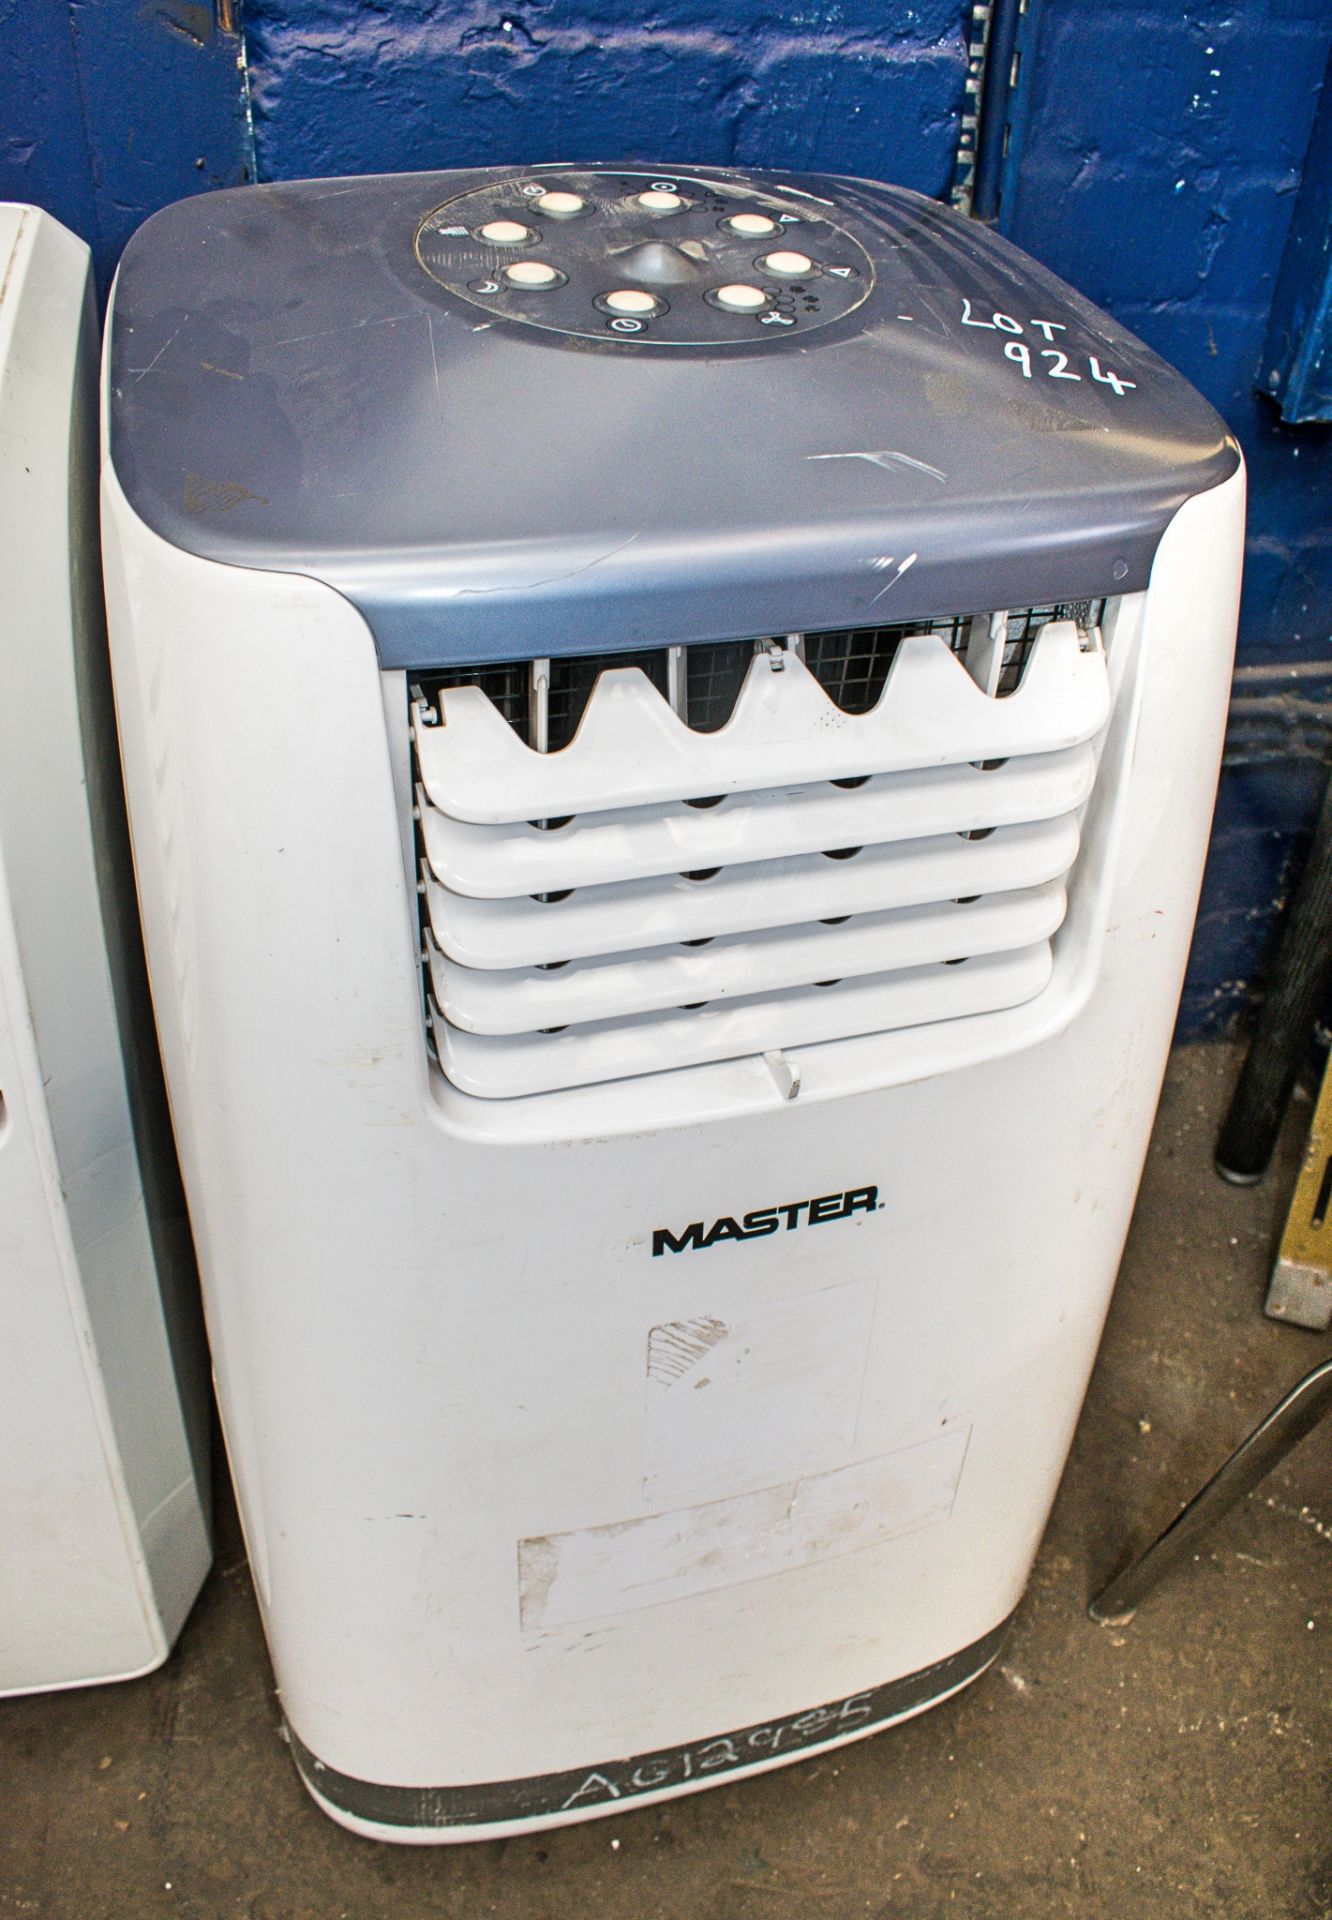 Master 240v air conditioning unit A612985